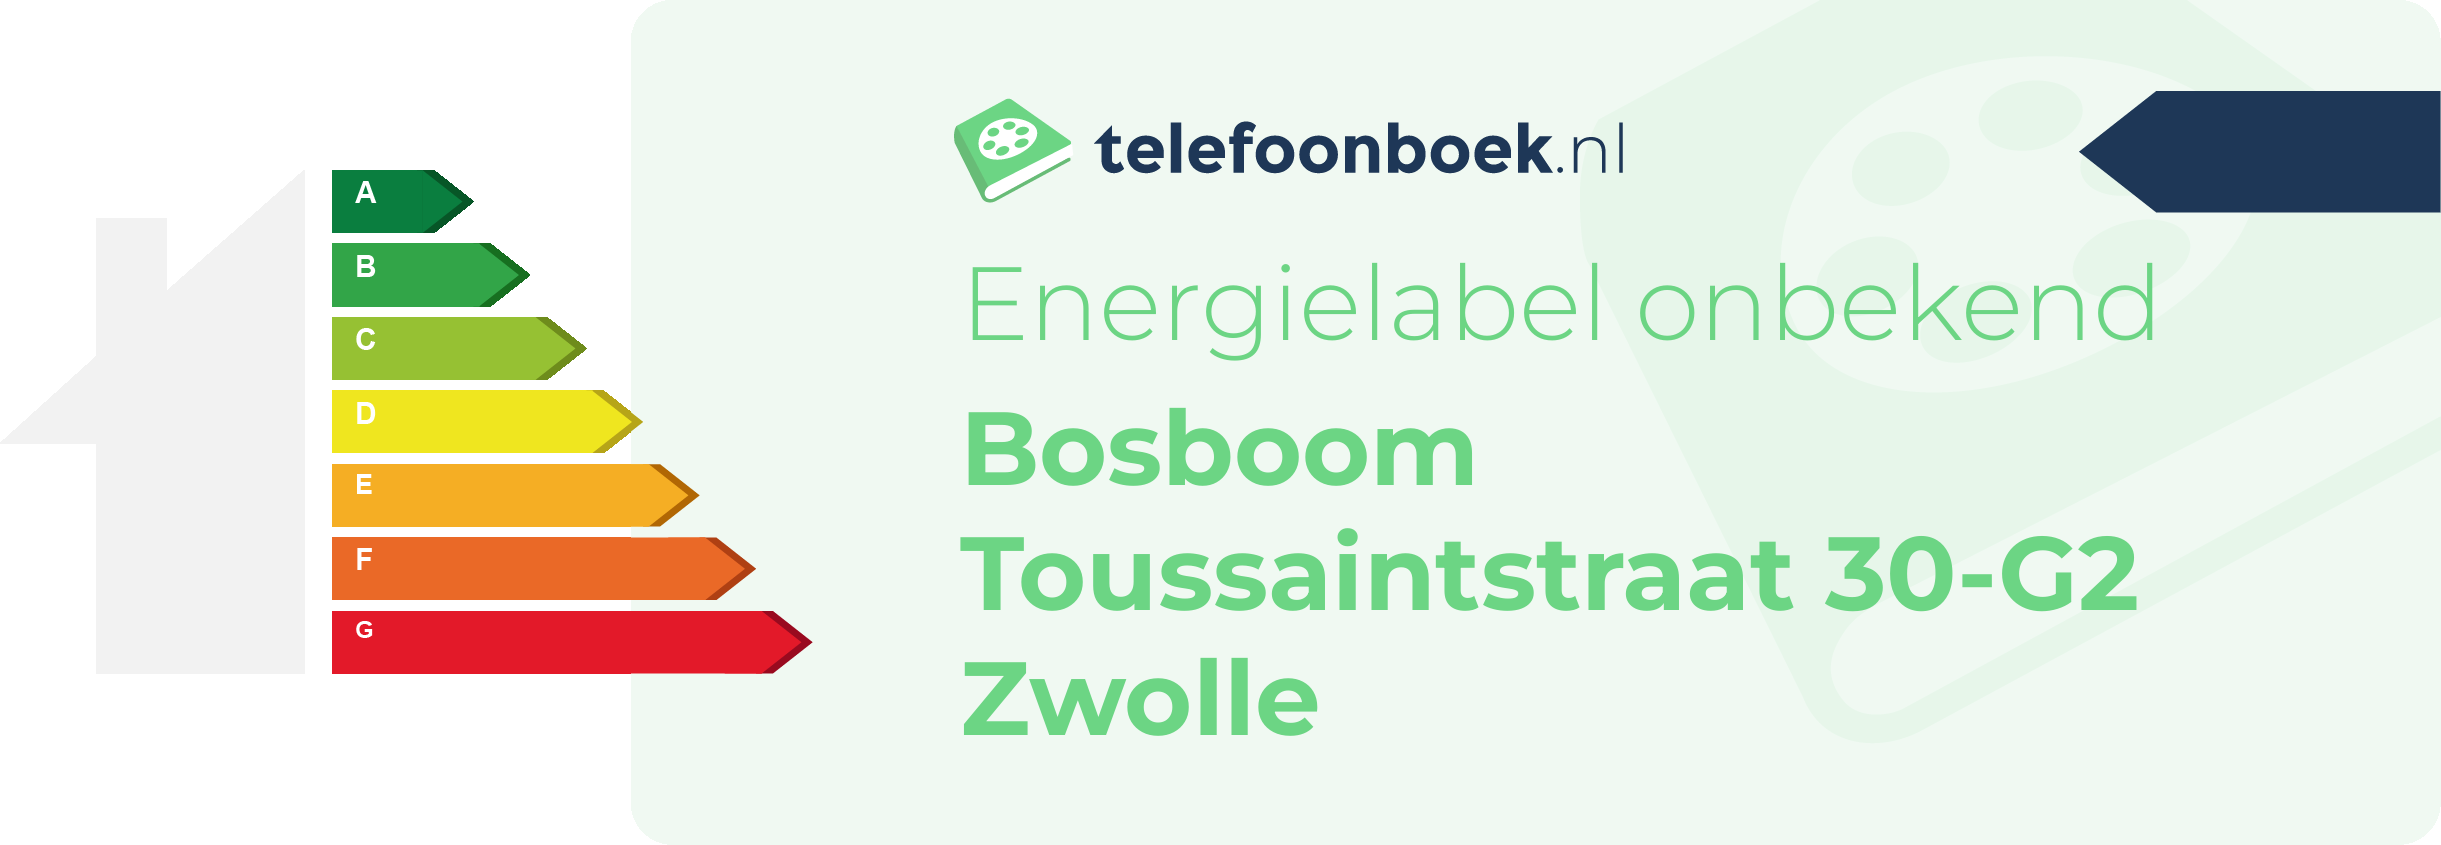 Energielabel Bosboom Toussaintstraat 30-G2 Zwolle